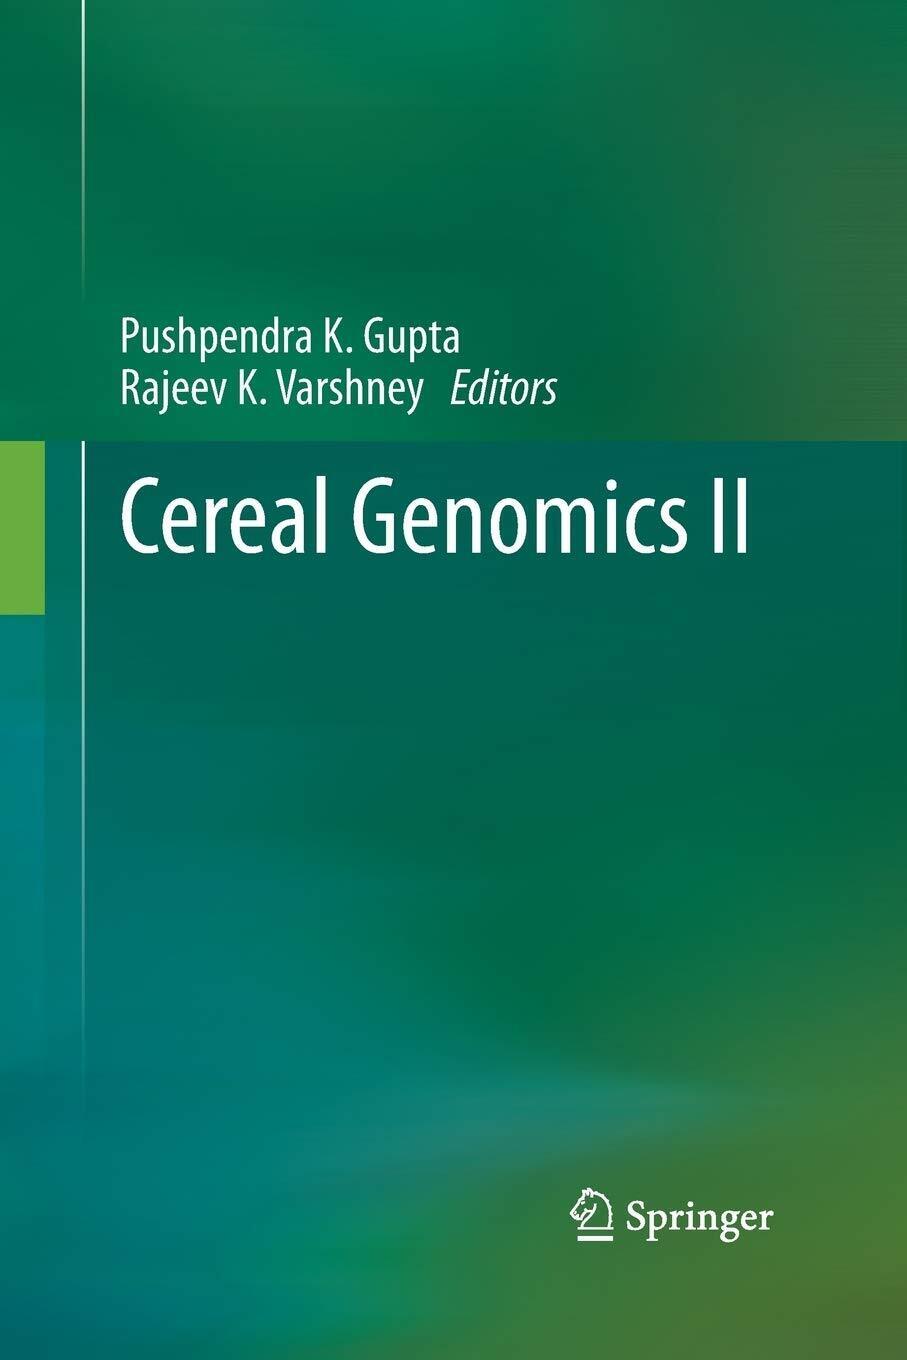 Cereal Genomics II - Pushpendra K. Gupta - Springer, 2015